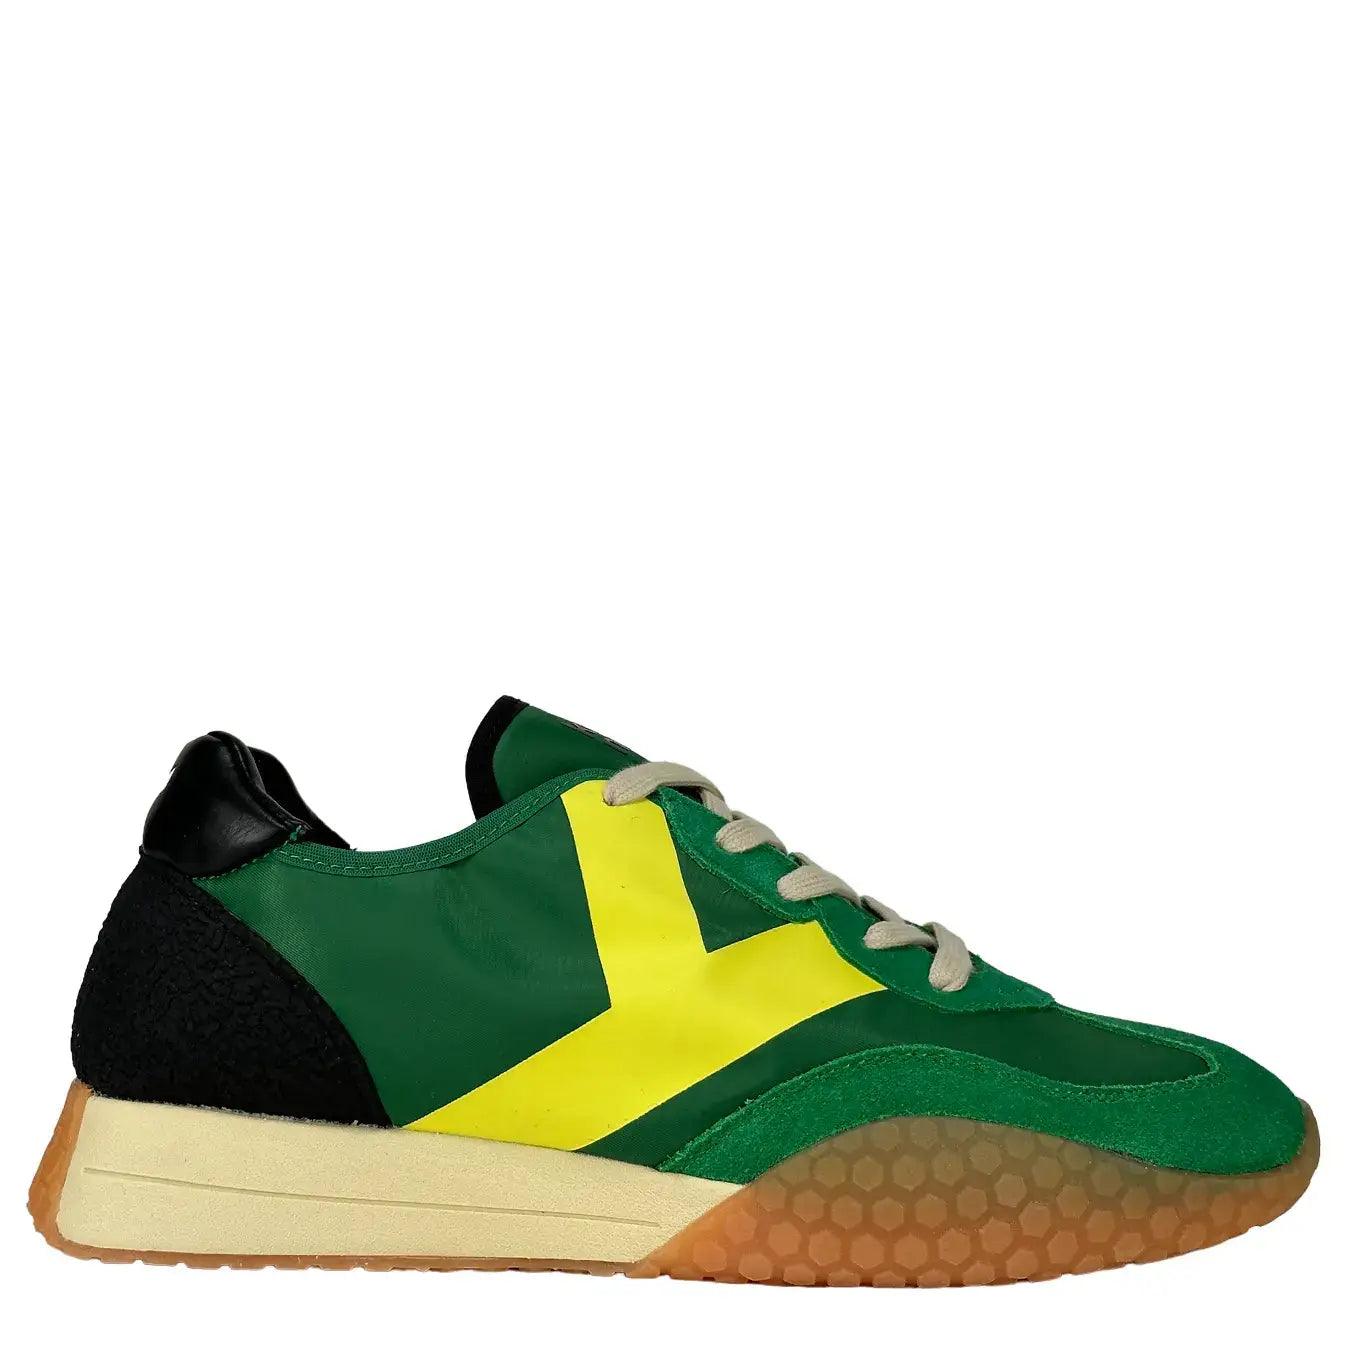 keh noo Sneakers, Km9313, Logo Bianco, Green Wht, Bassiniboutique.it, 2023 p/e